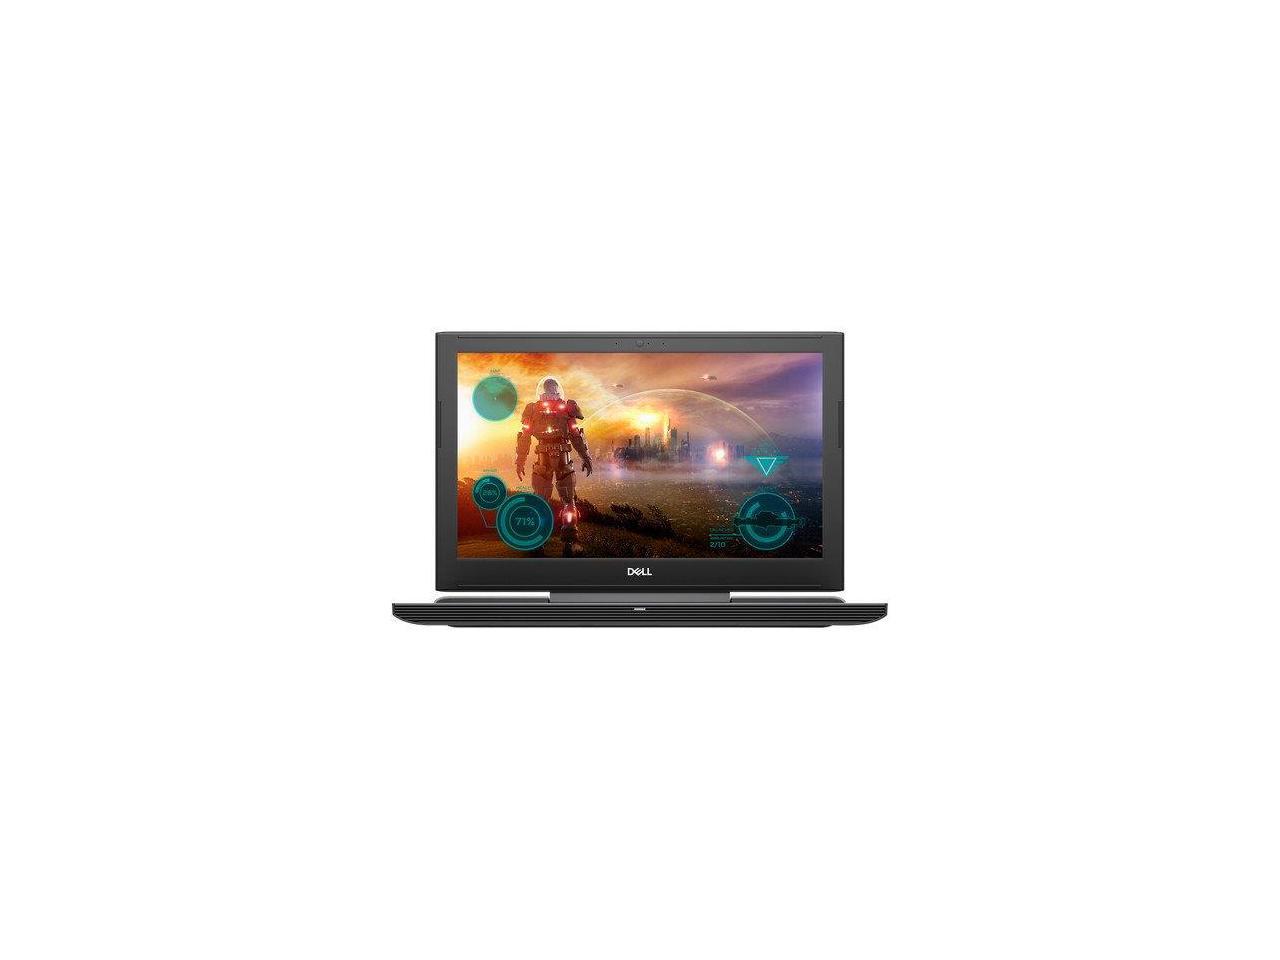 Dell Inspiron 7000 15.6" IPS FHD Gaming Laptop | VR Ready | Intel Quad Core i5-7300HQ | 8GB RAM 128GB SSD 1TB HDD | NVIDIA GeForce GTX 1060 6GB GDDR5 | Windows 10 Black